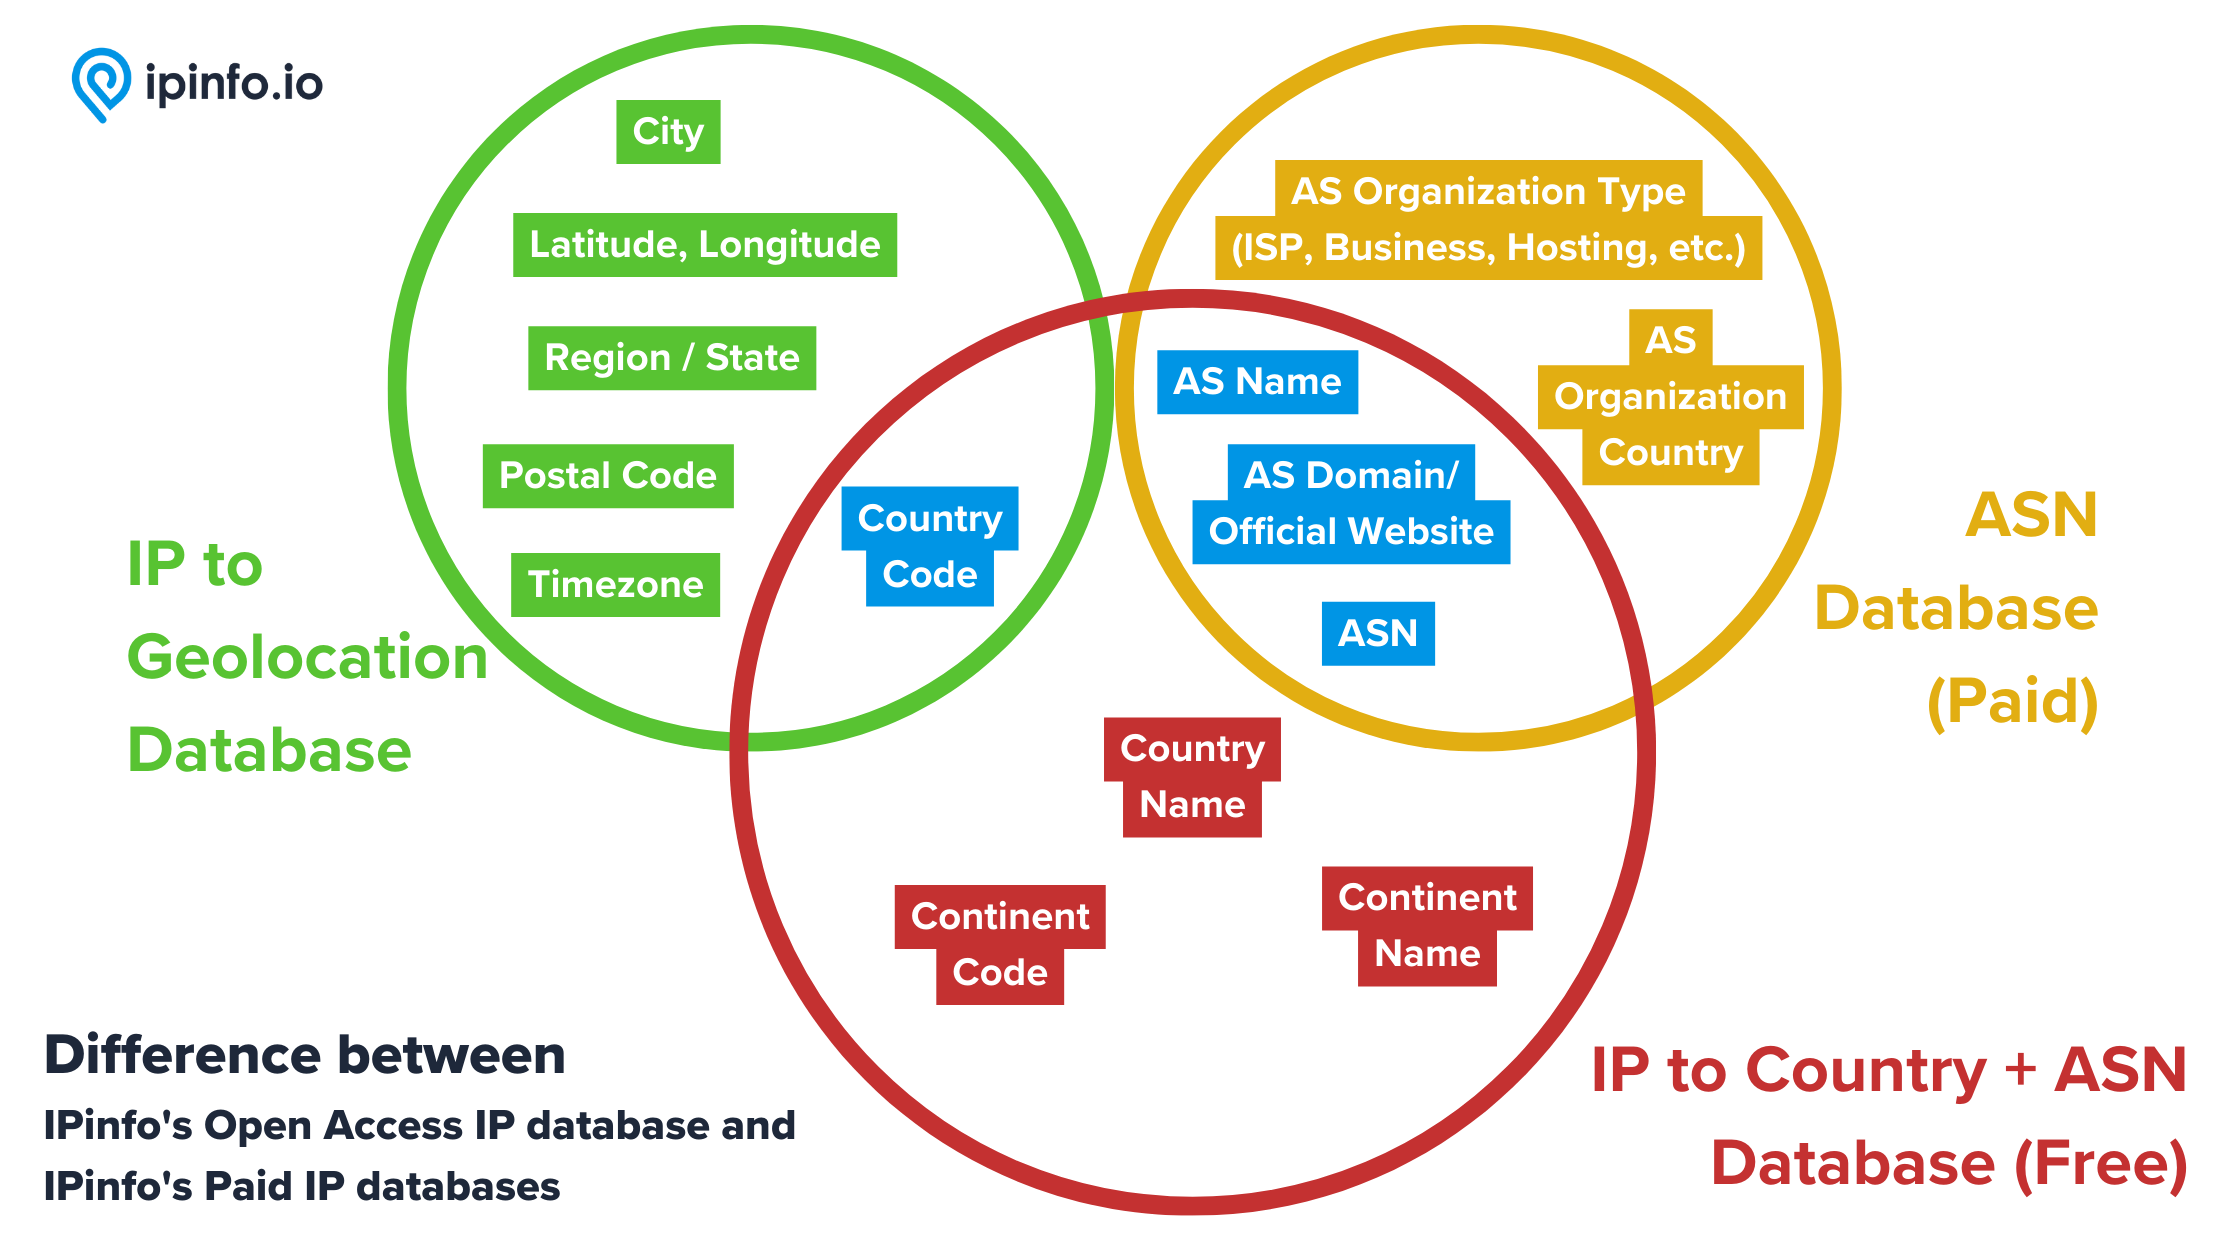 Meet IPinfo’s Free IP Data Downloads